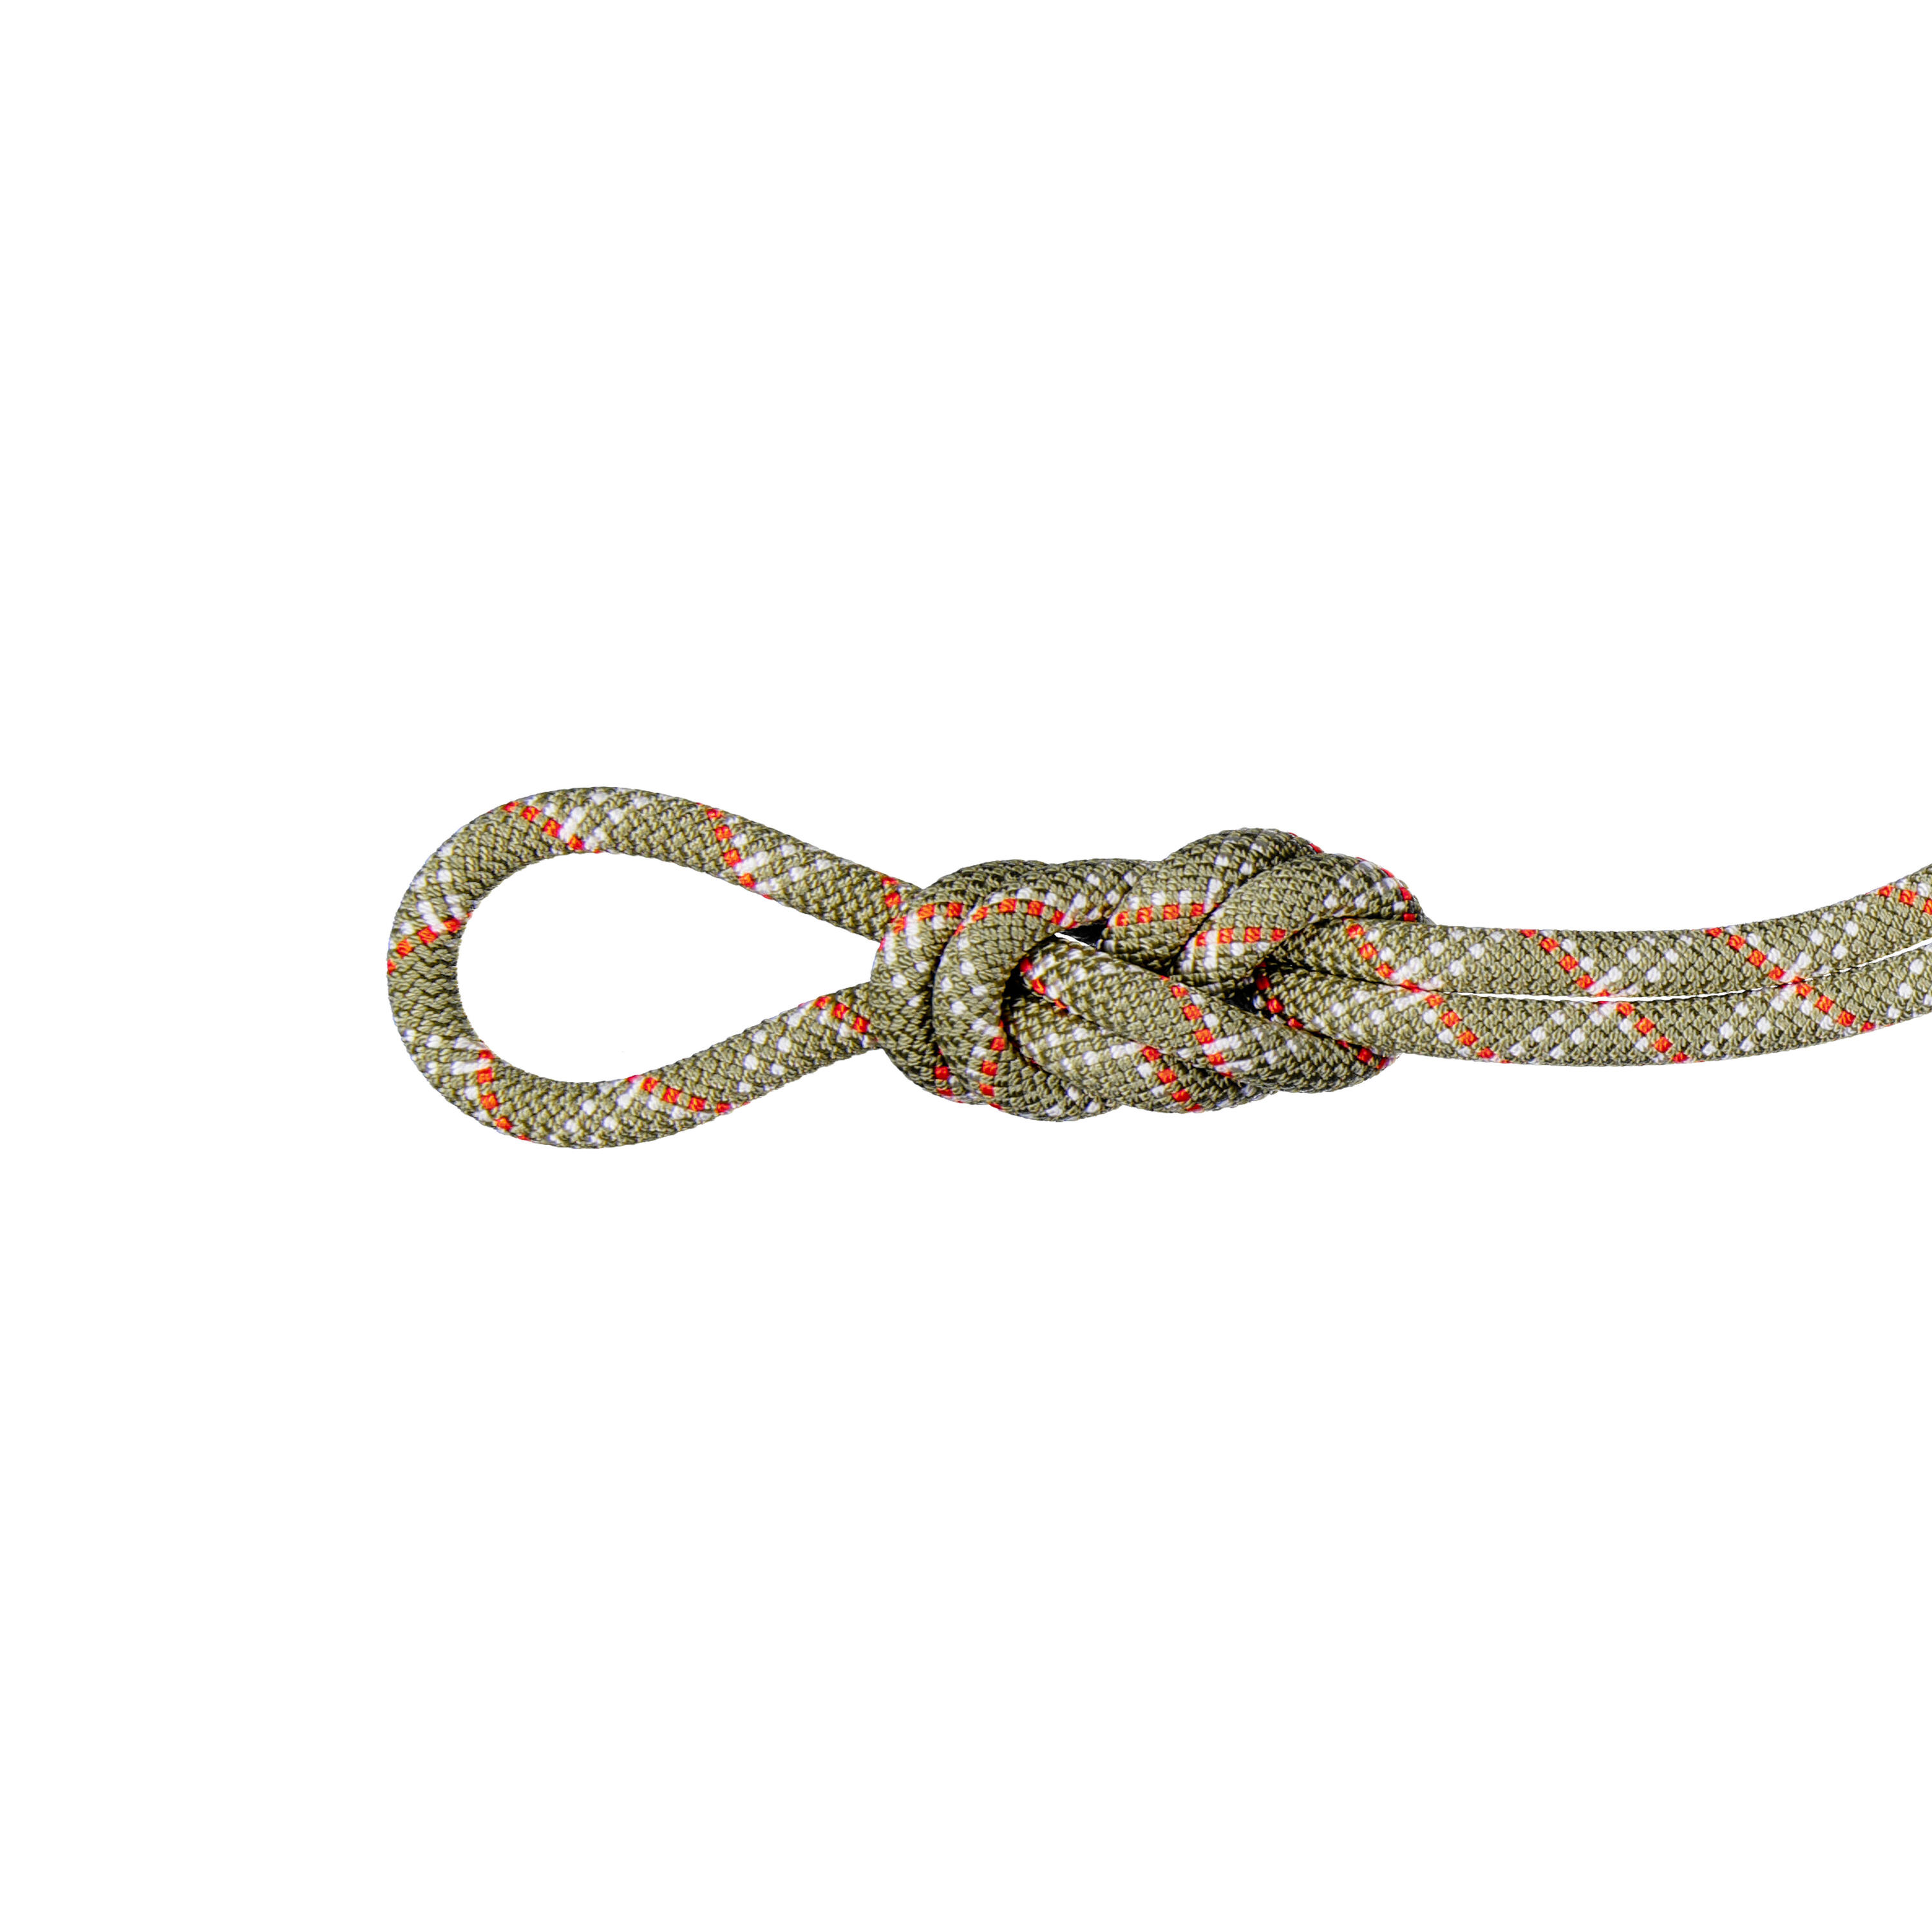 MAMMUT Gym Classic Single Rope 9.5 mm x 50m - Olive